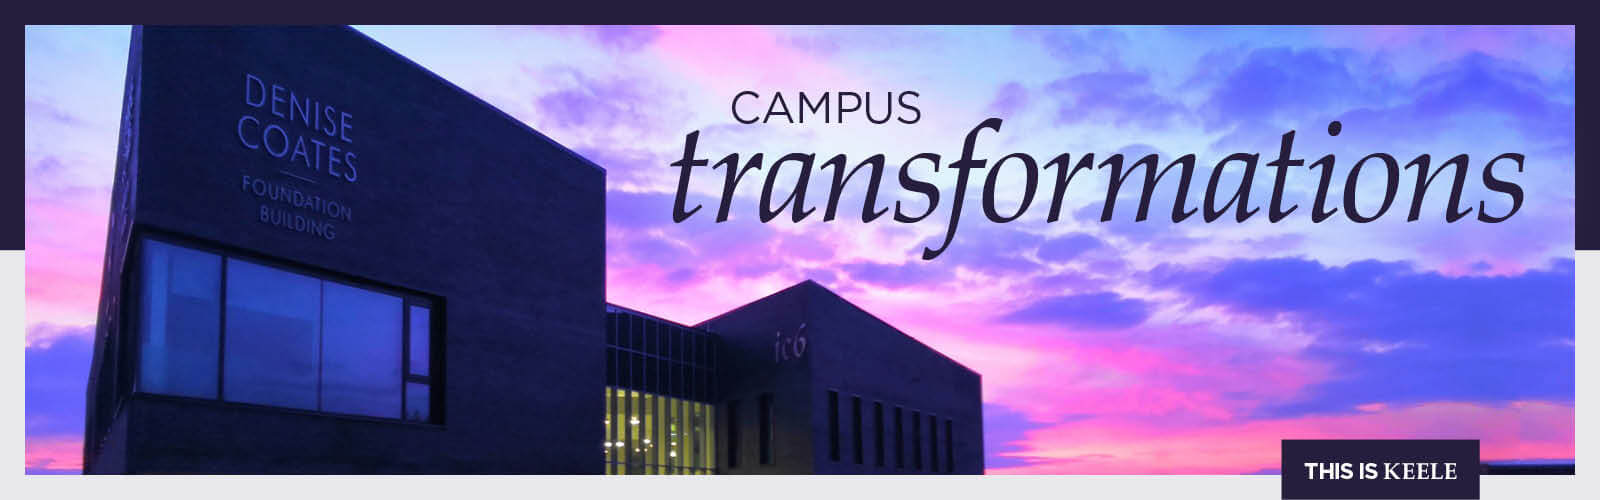 Aerial campus banner